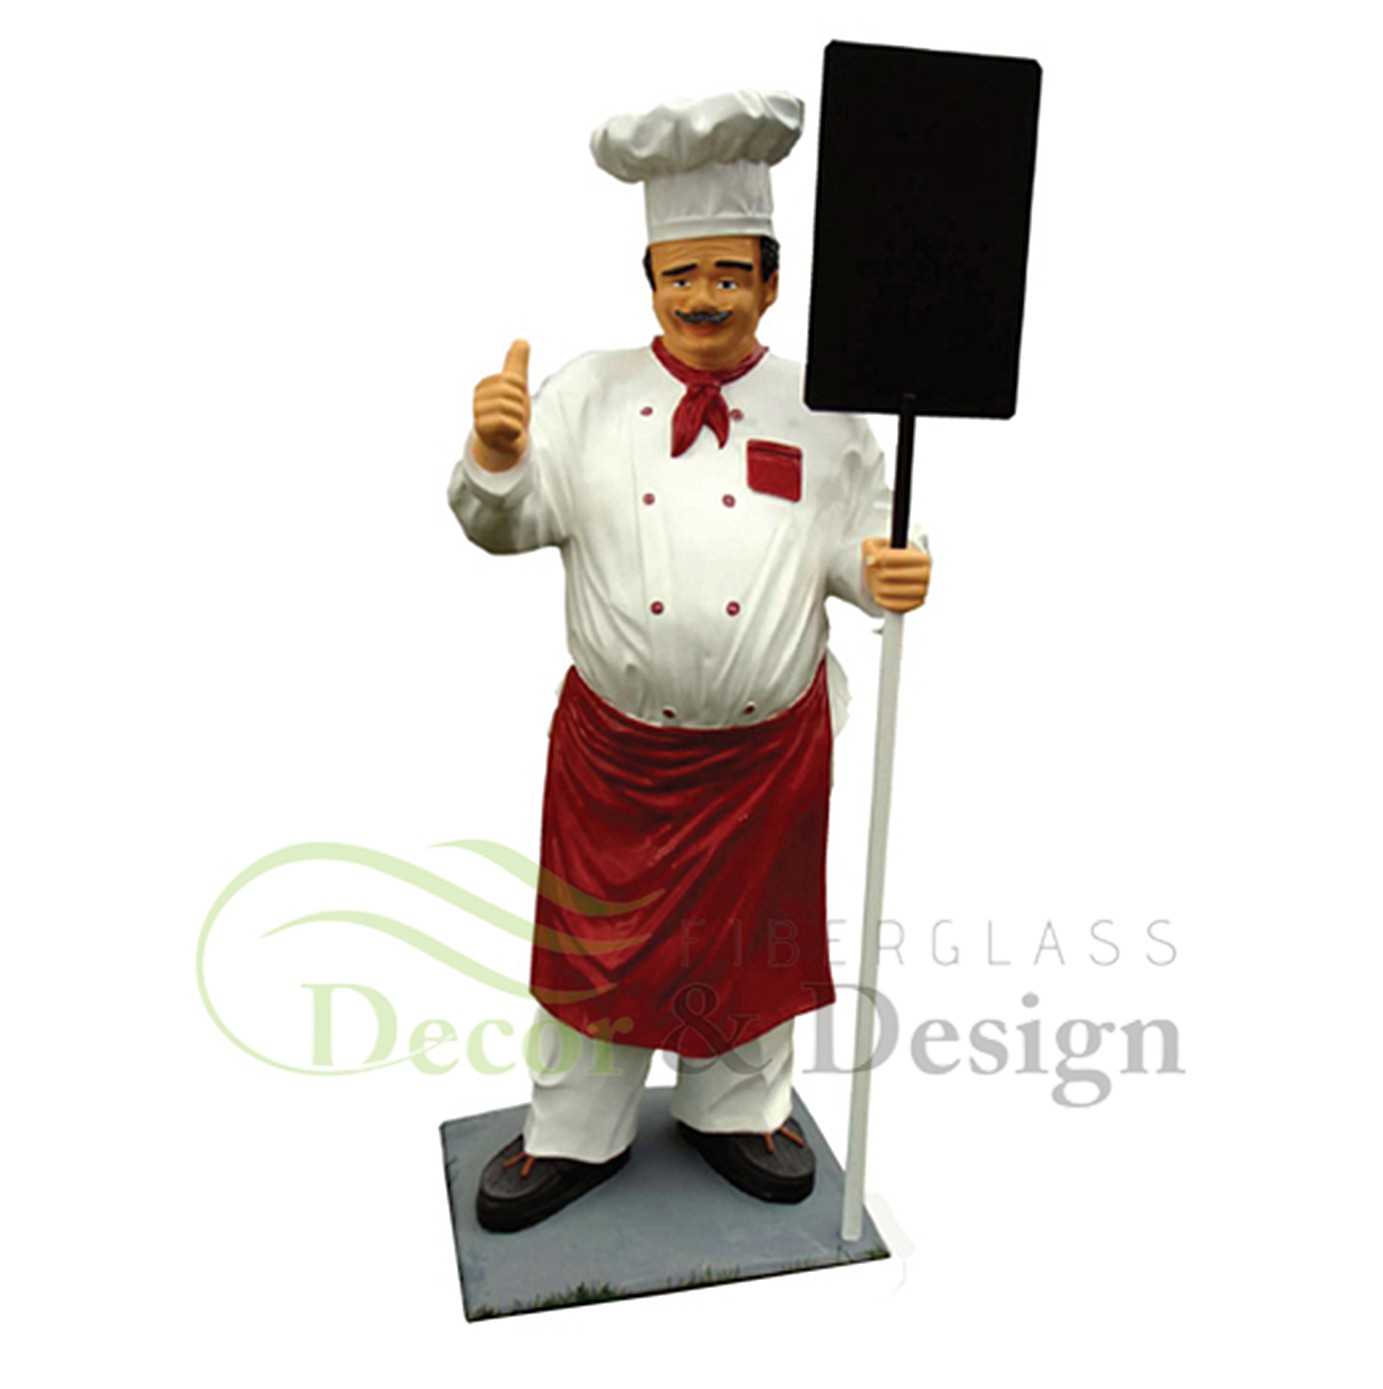 Decorative figure - Chef z Design sp. menu Decor witch Statue Fiberglass 